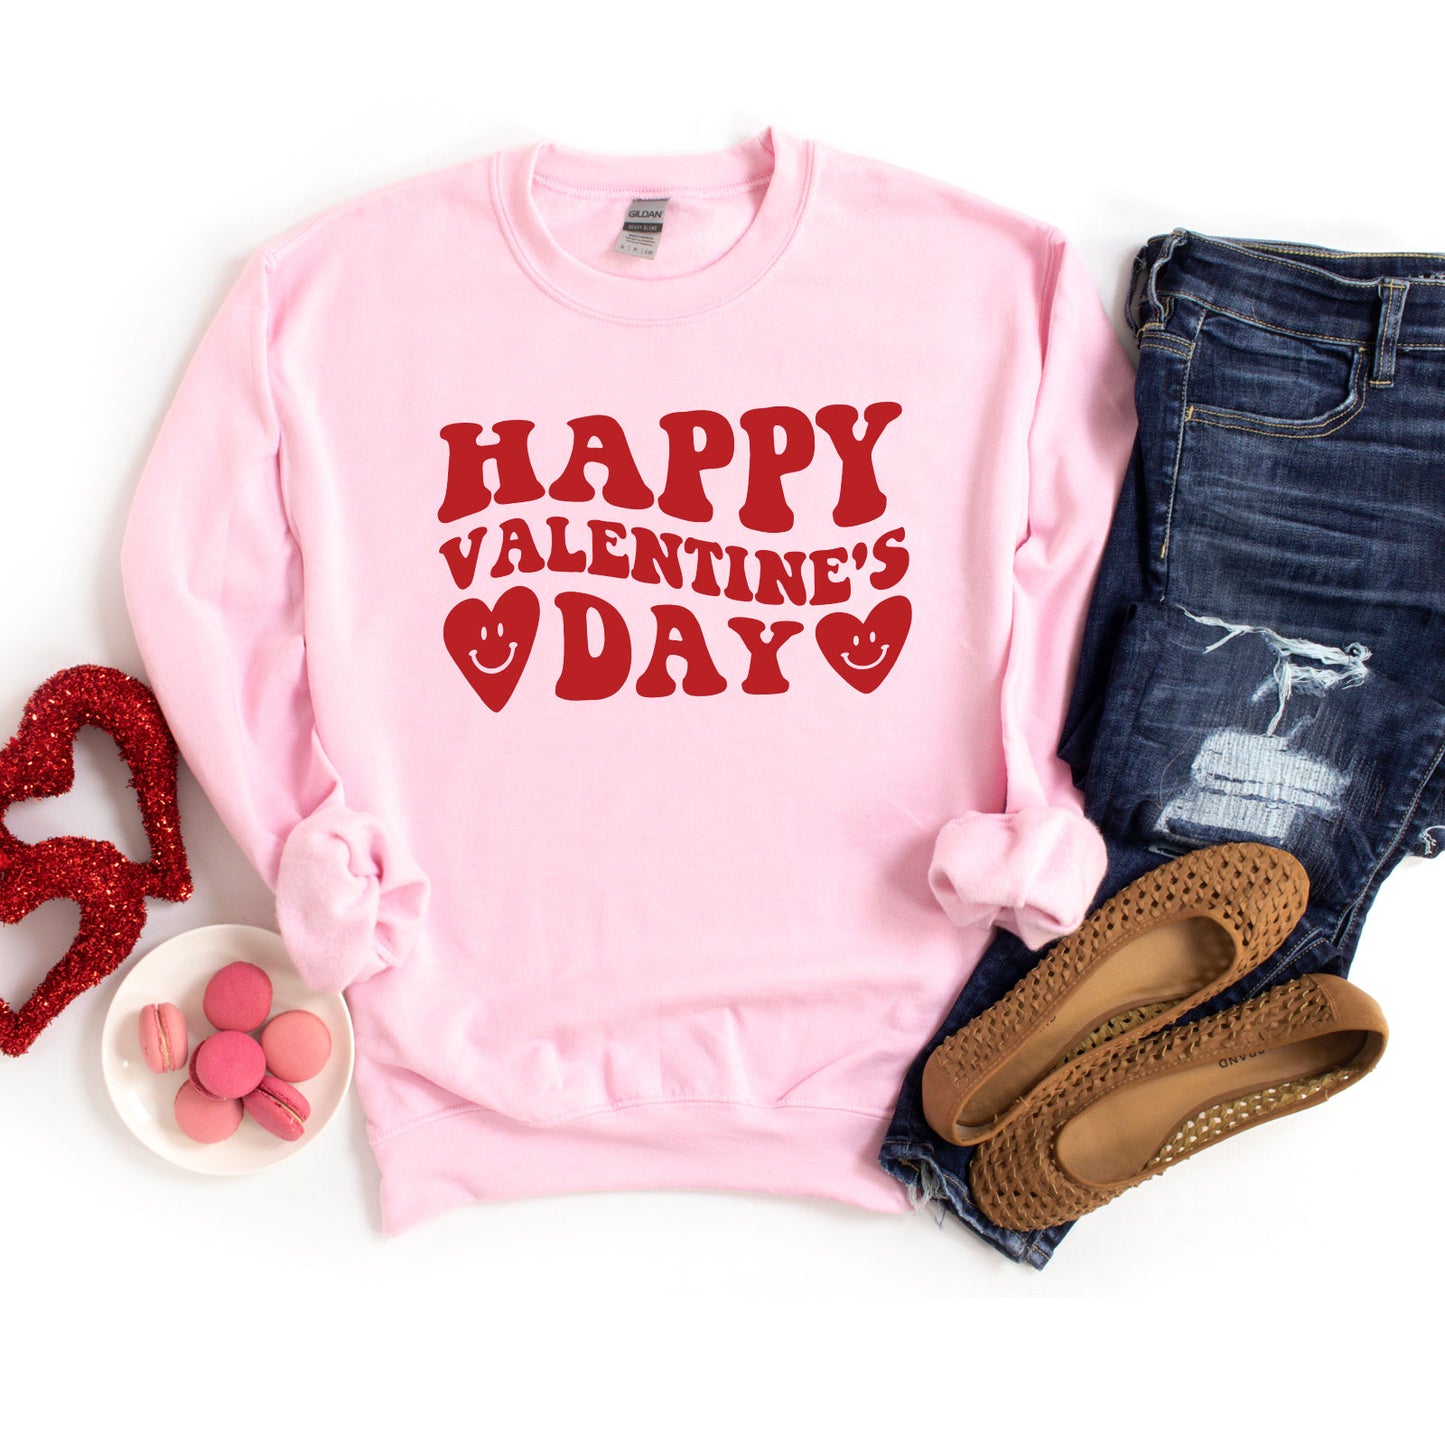 Happy Valentines Day Hearts | Sweatshirt